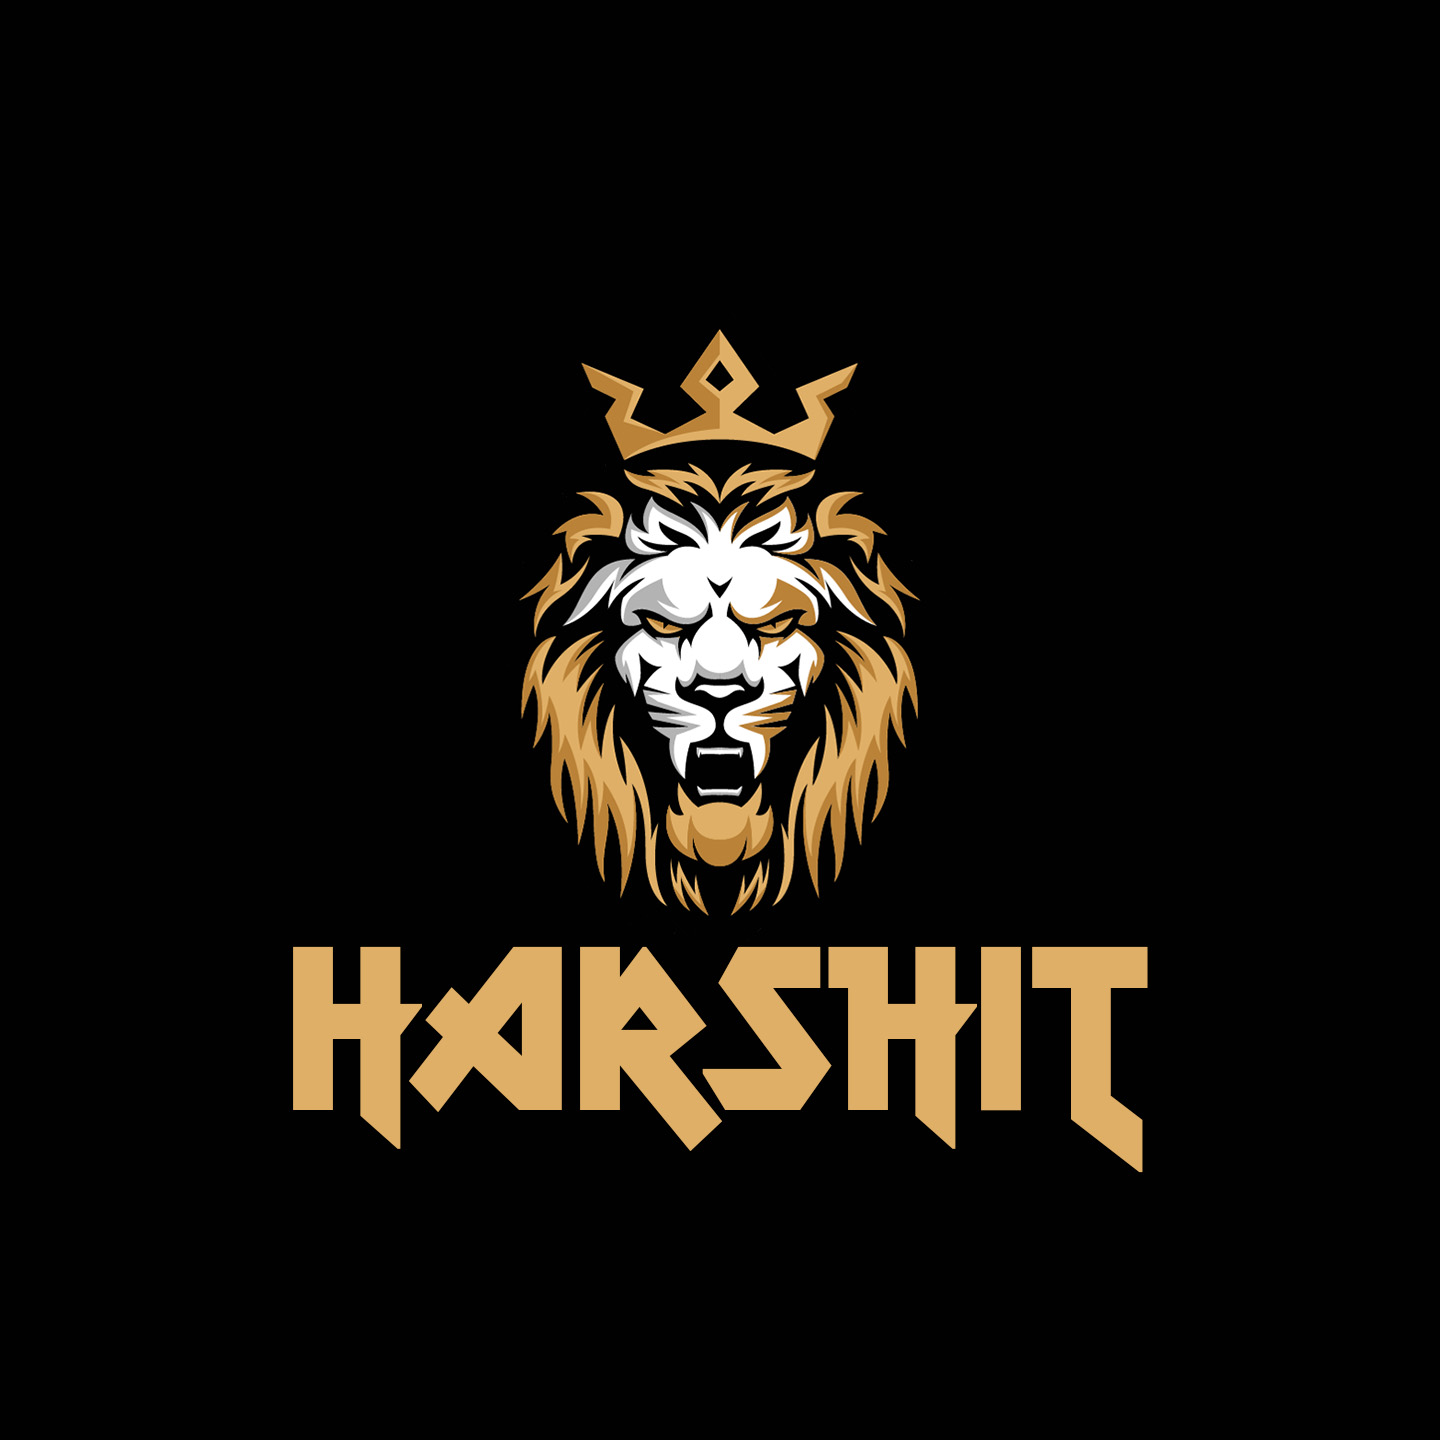 HARSHIT PHOTOGRAPHY - Har$hit Edition